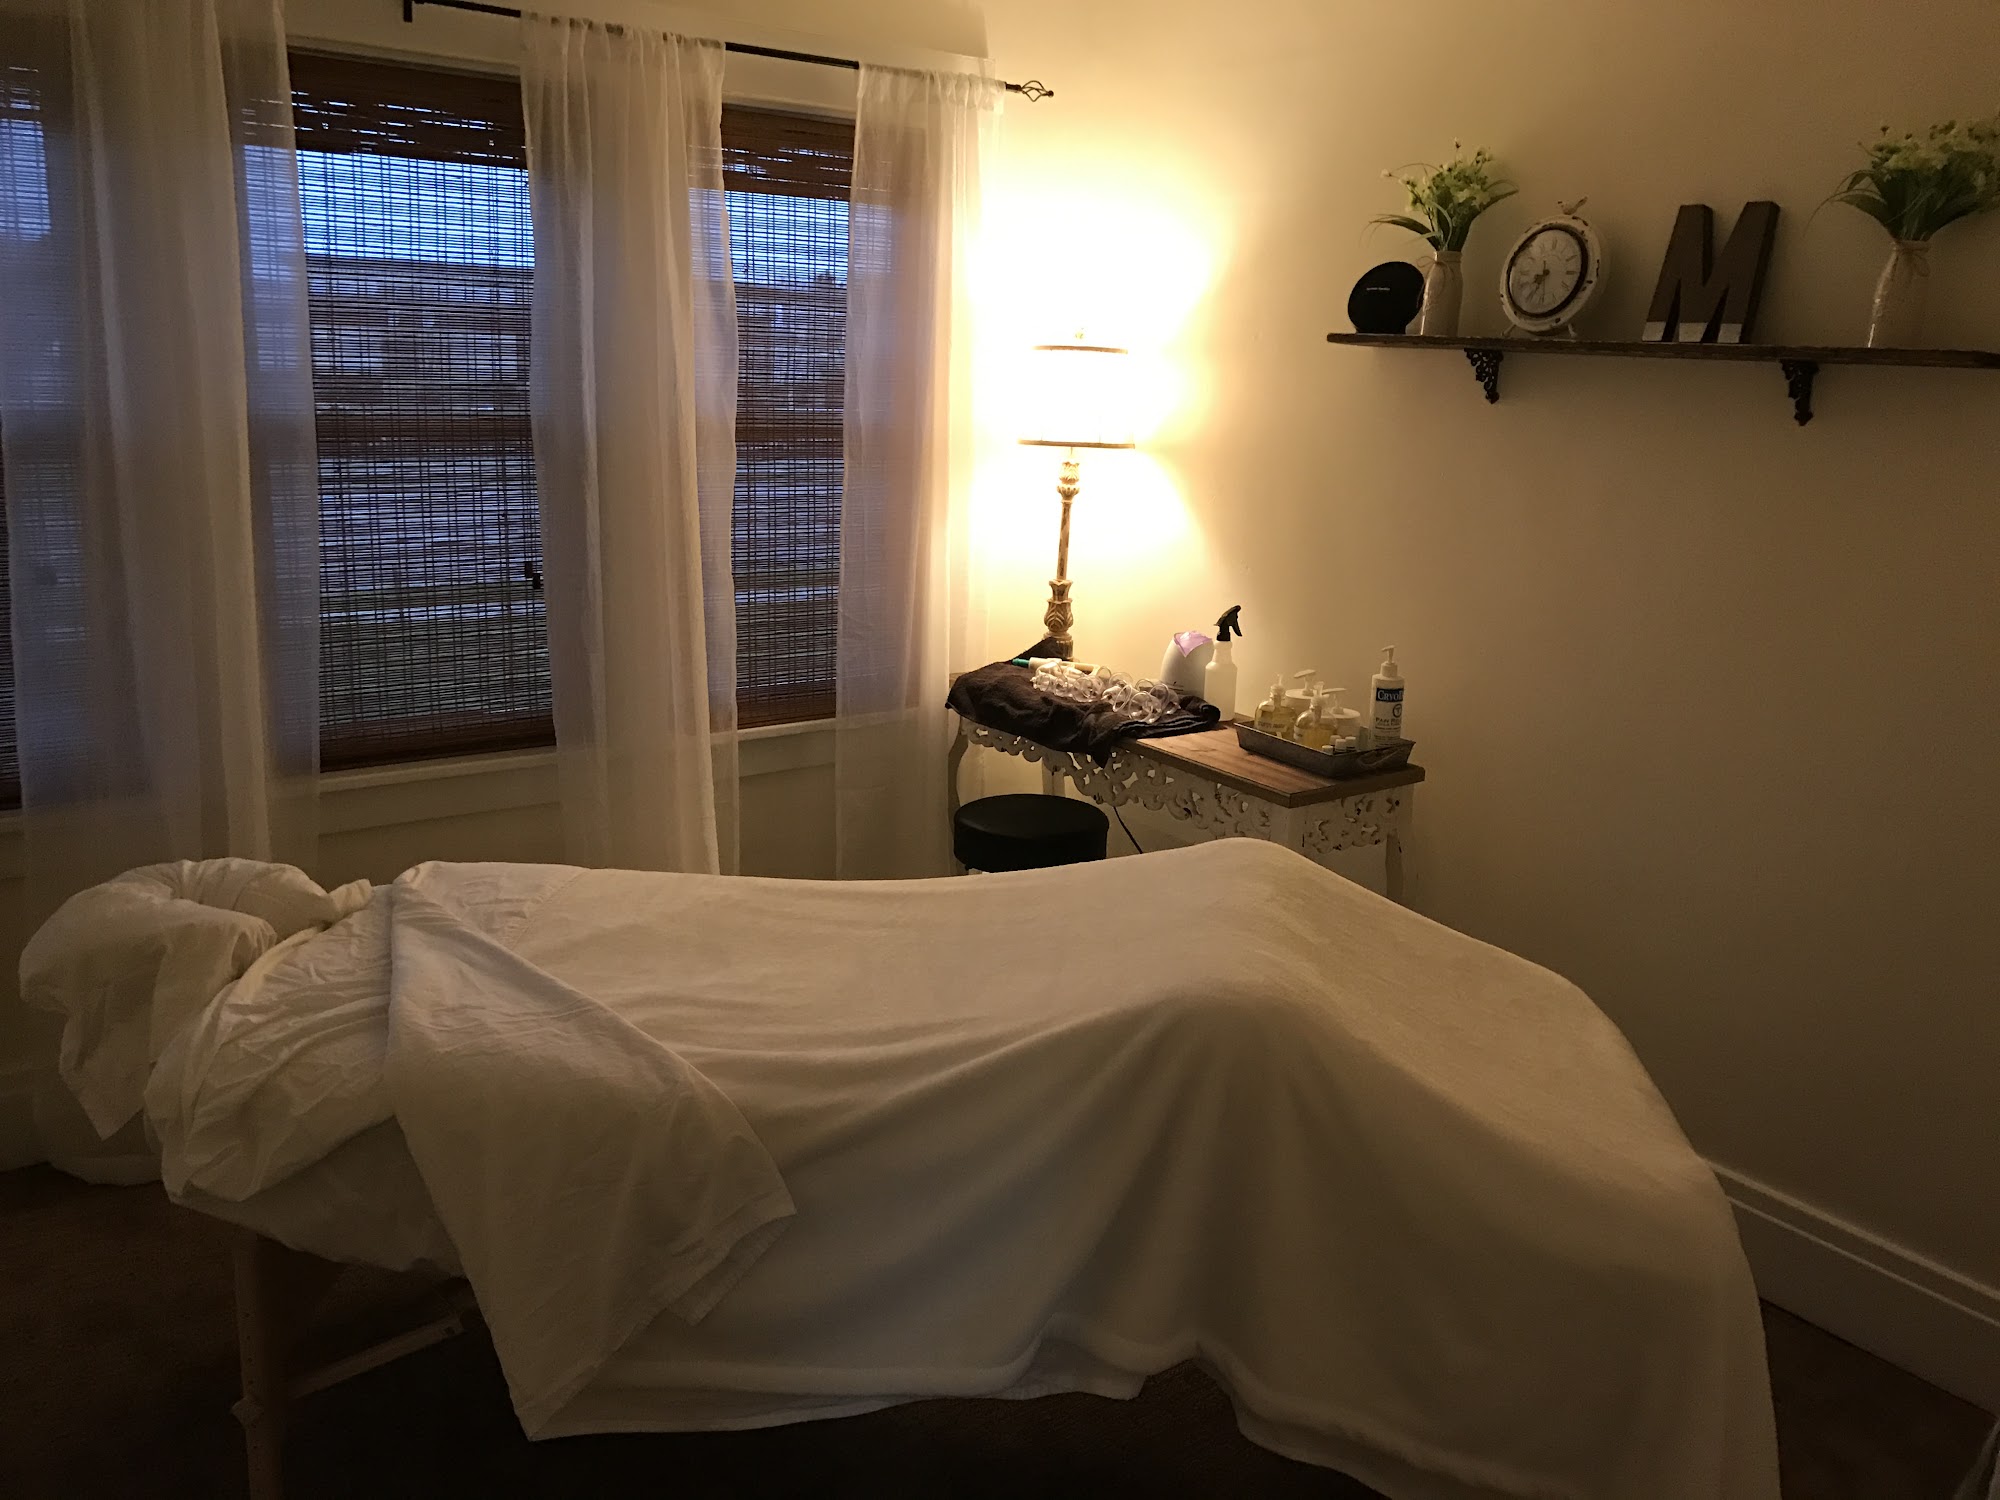 Essential hair salon & therapeutic massage